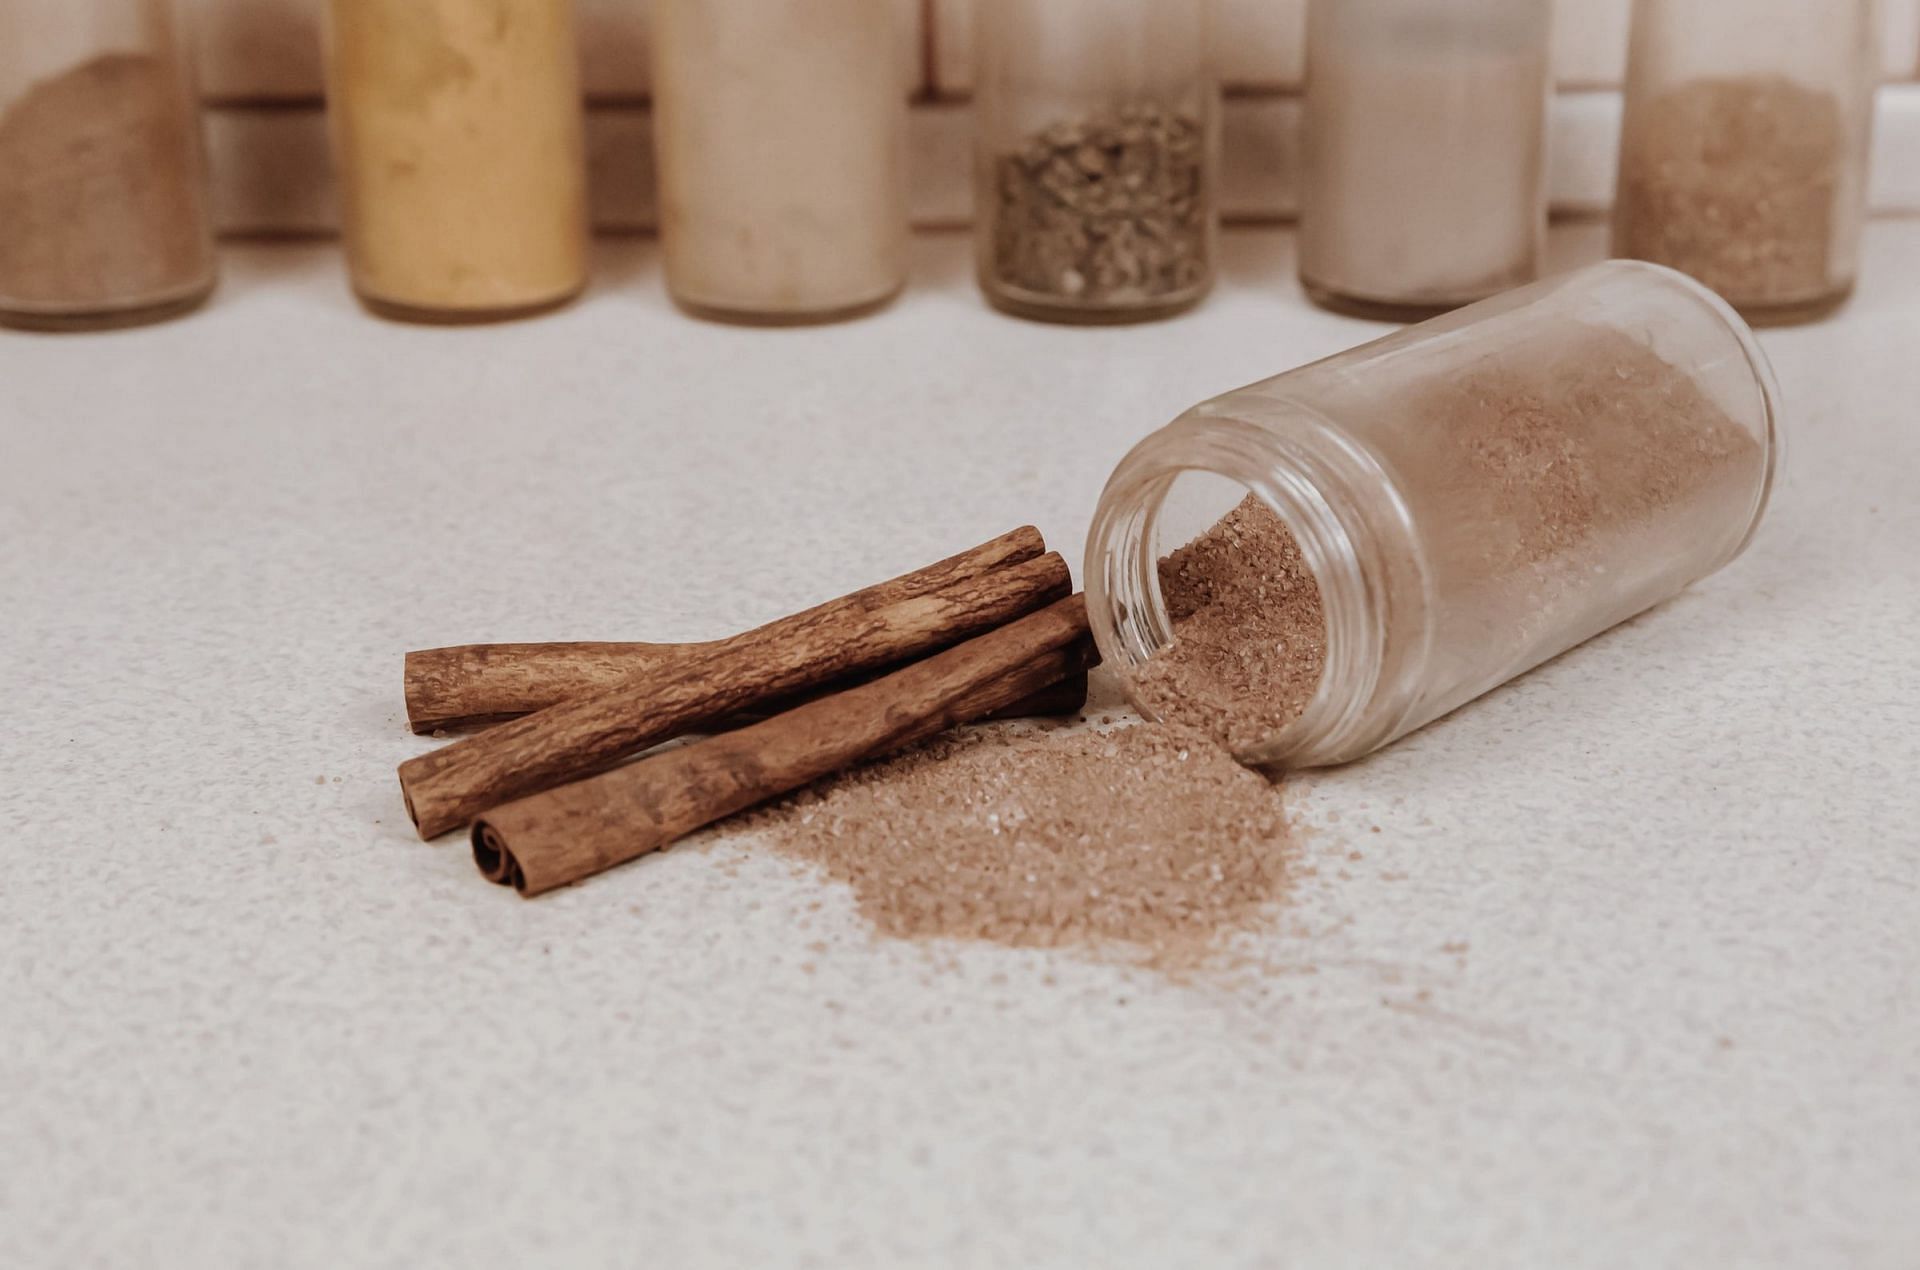 Cinnamon has antiinflammatory properties. (Photo by Diana Polekhina on Unsplash